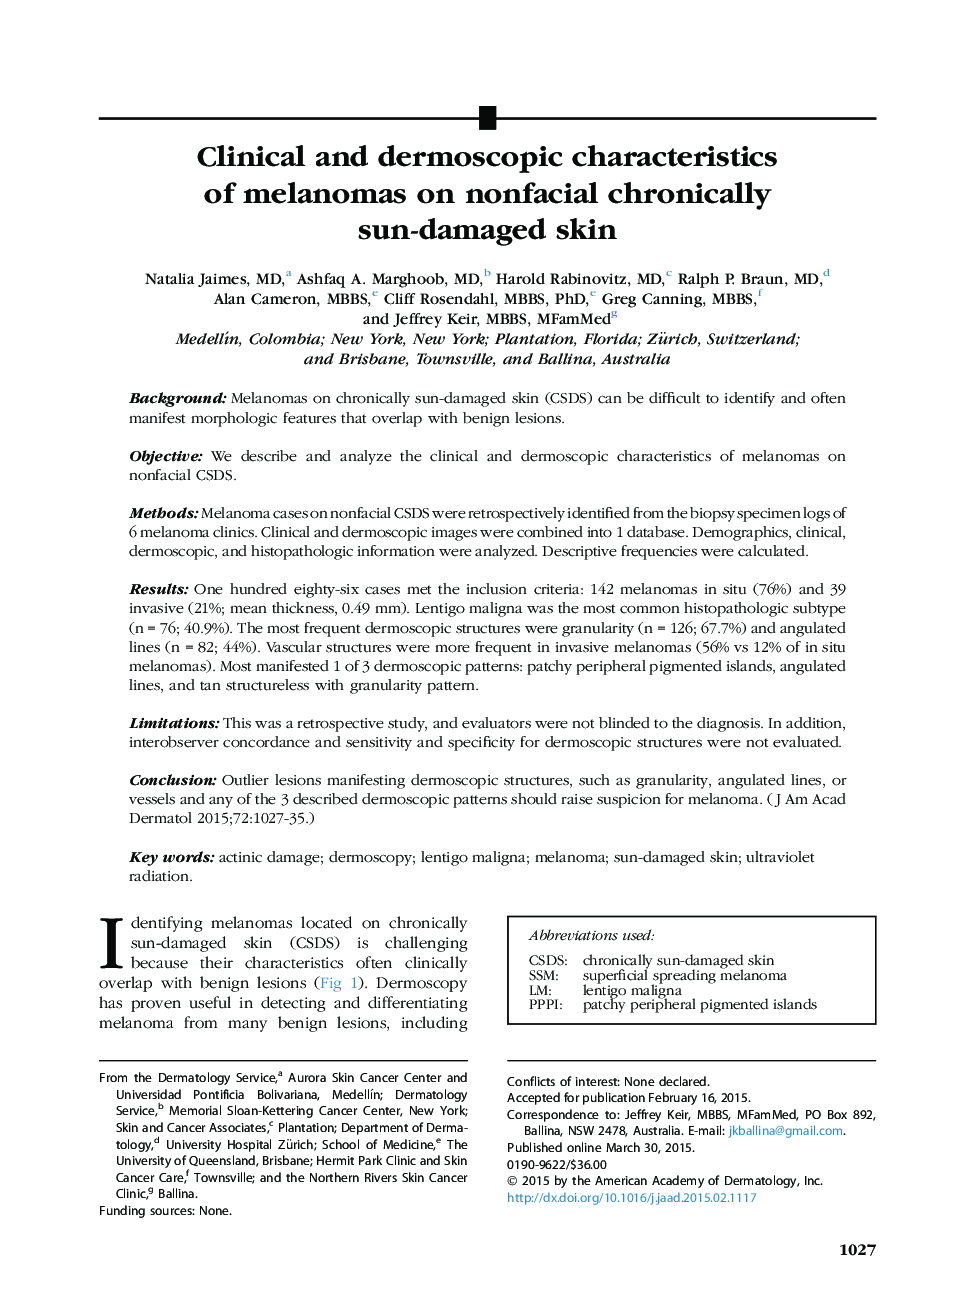 Clinical and dermoscopic characteristics of melanomas on nonfacial chronically sun-damaged skin 